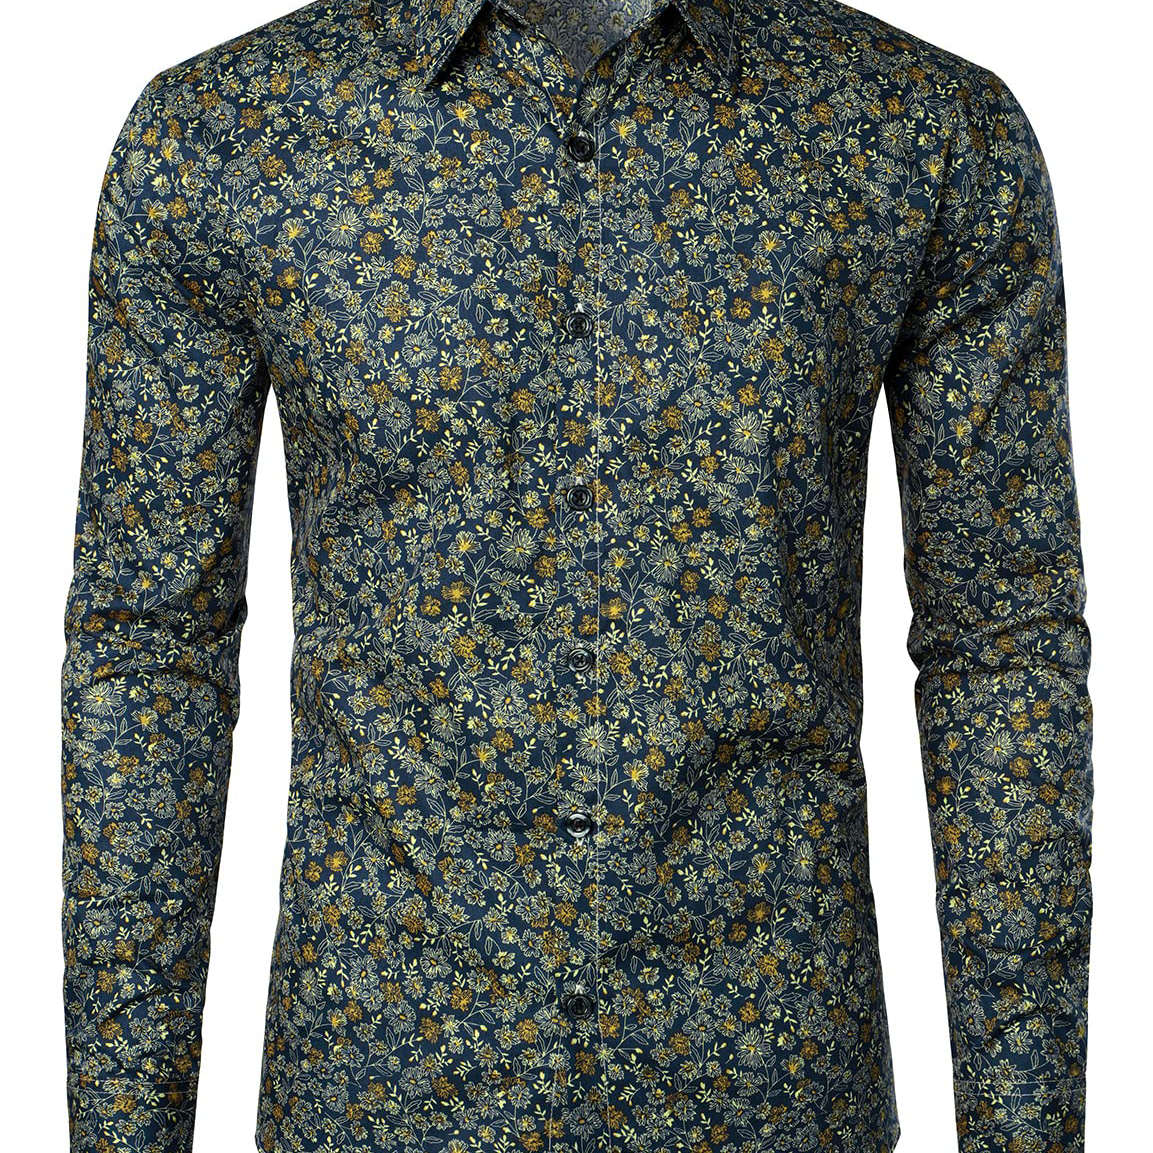 Camisa de vestir de manga larga con botones de flores transpirables de algodón floral vintage azul marino para hombre